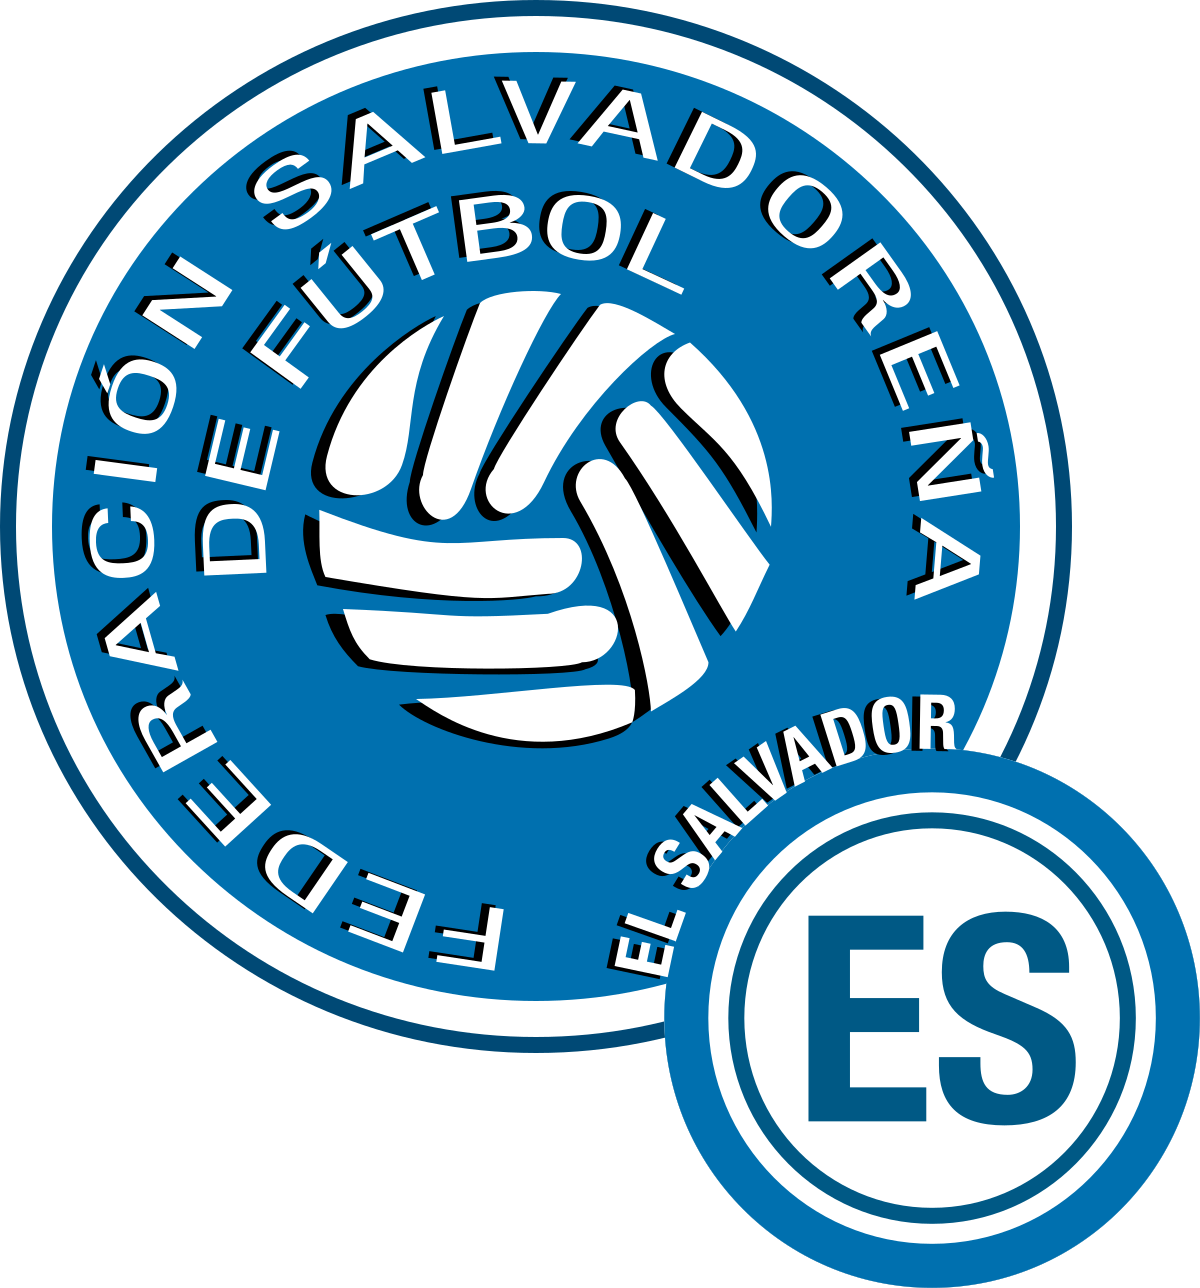 Salvadorena De Futbol SPT GPS